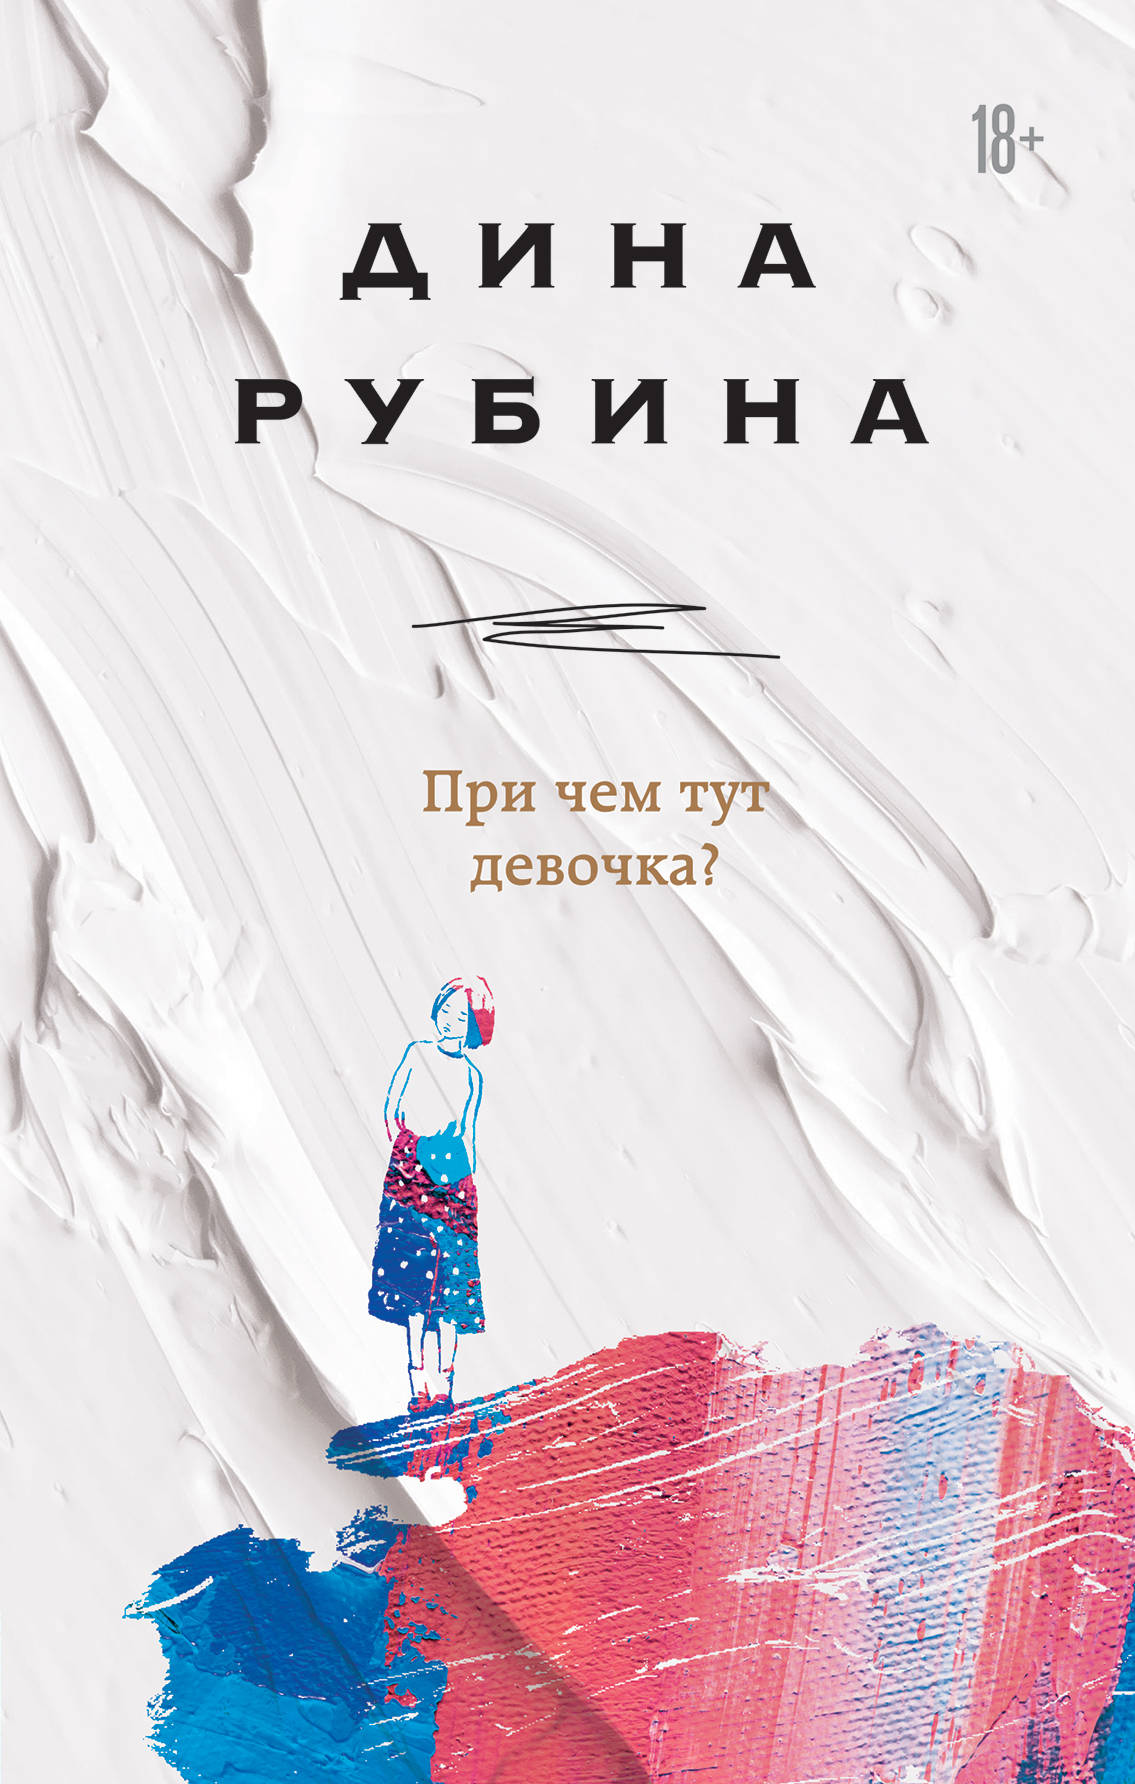 Book “При чём тут девочка?” by Дина Рубина — January 9, 2020